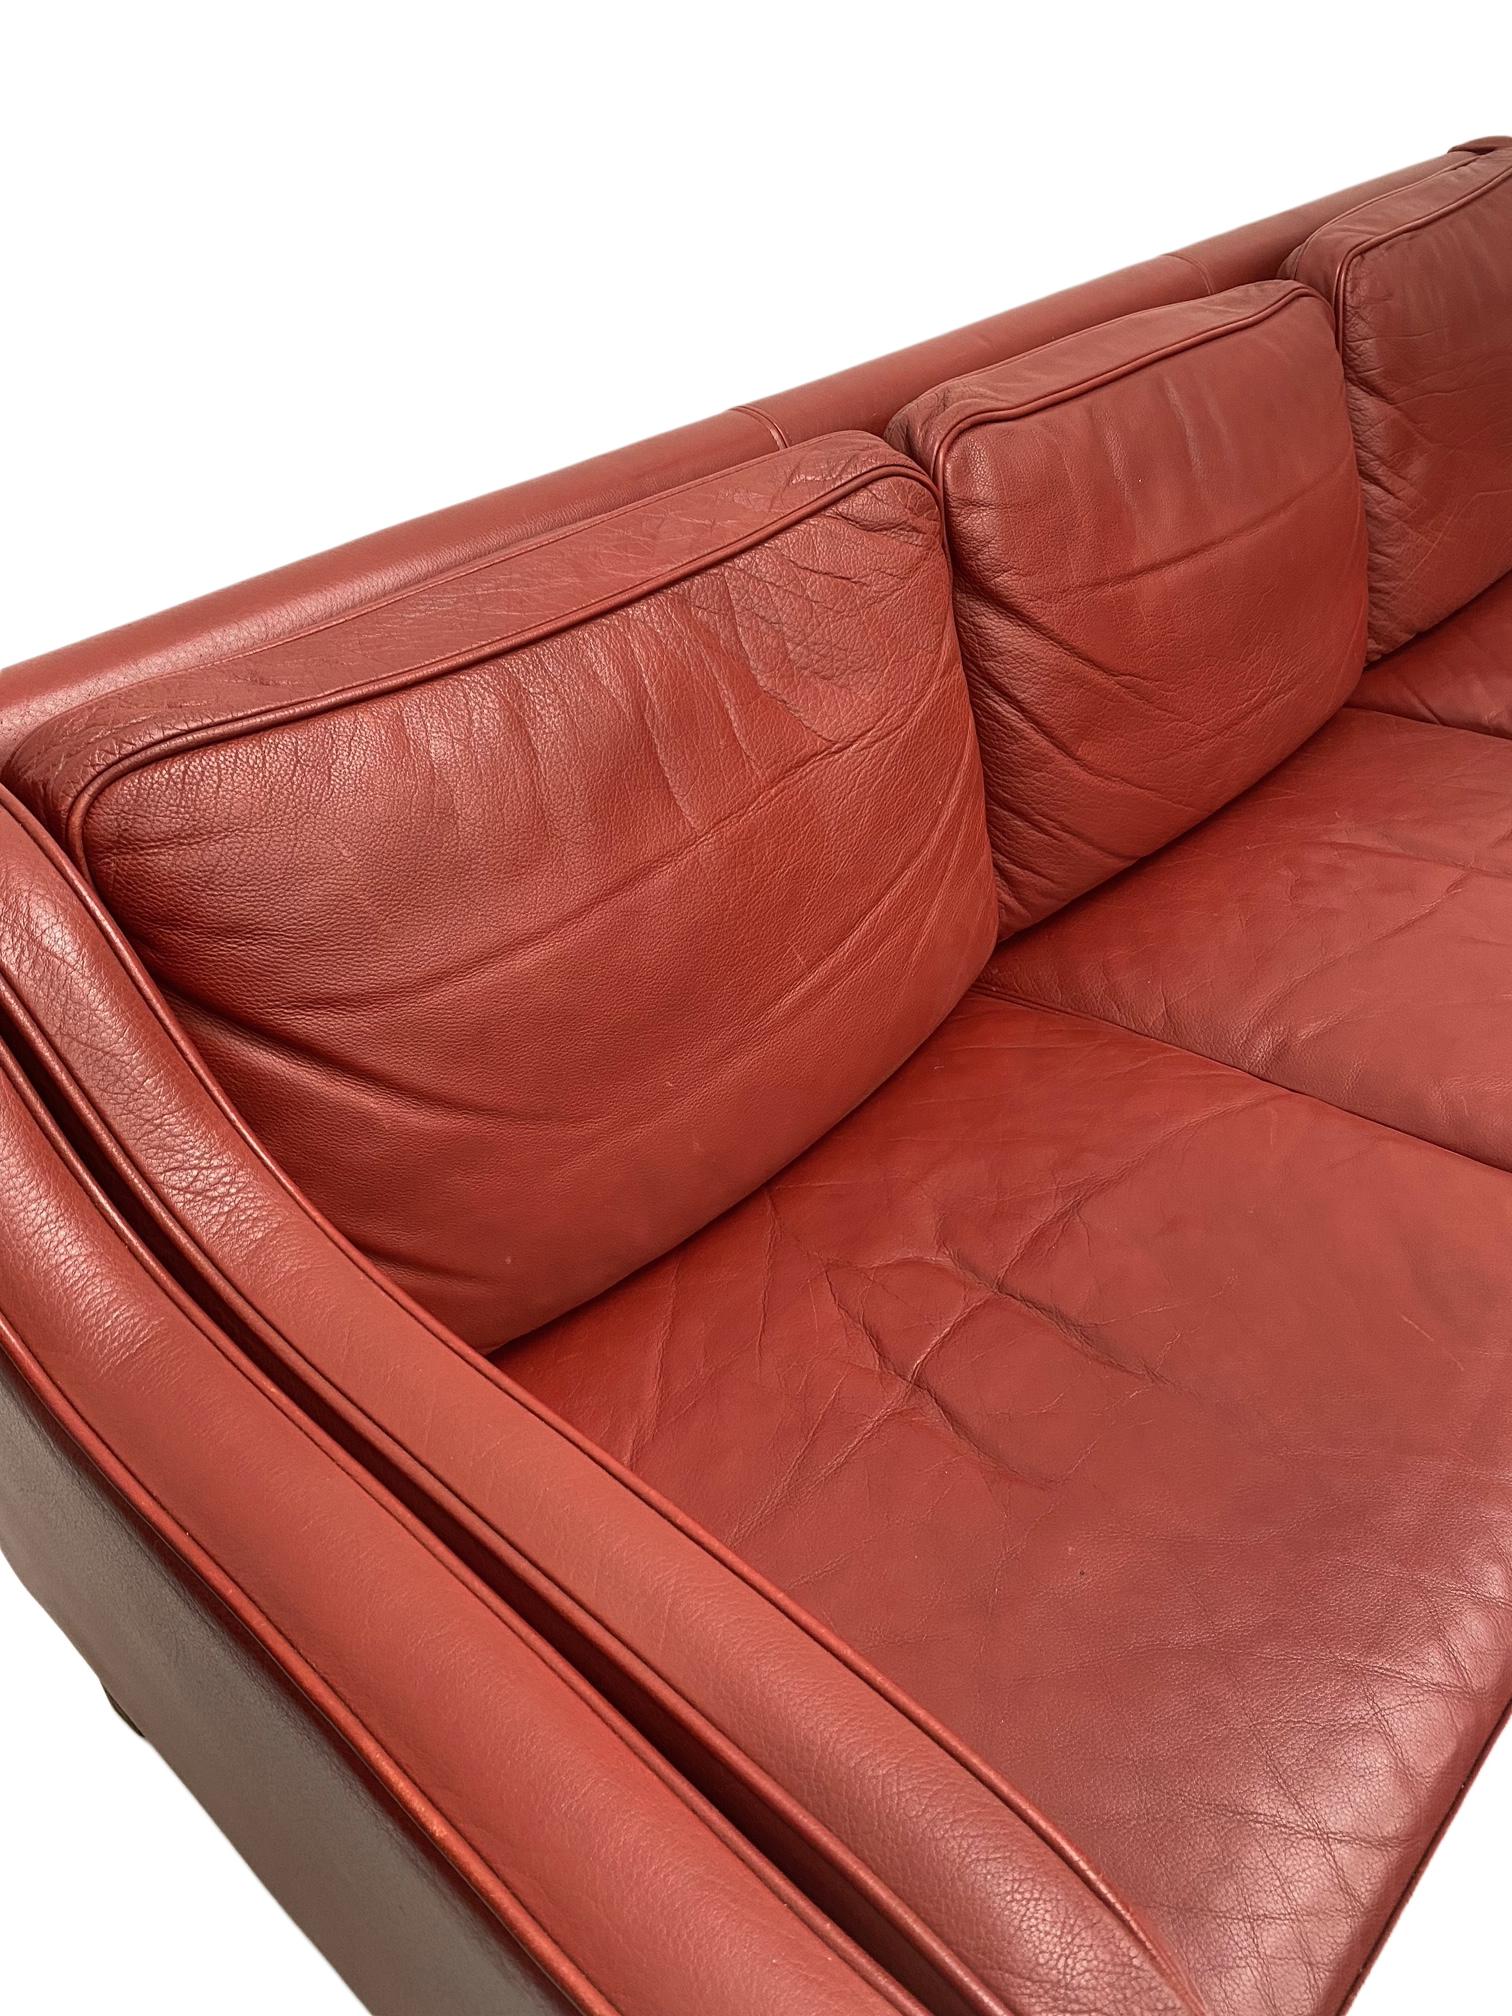 Mogens Hansen Red Leather 3 Seater Sofa, Danish, 1960s 8